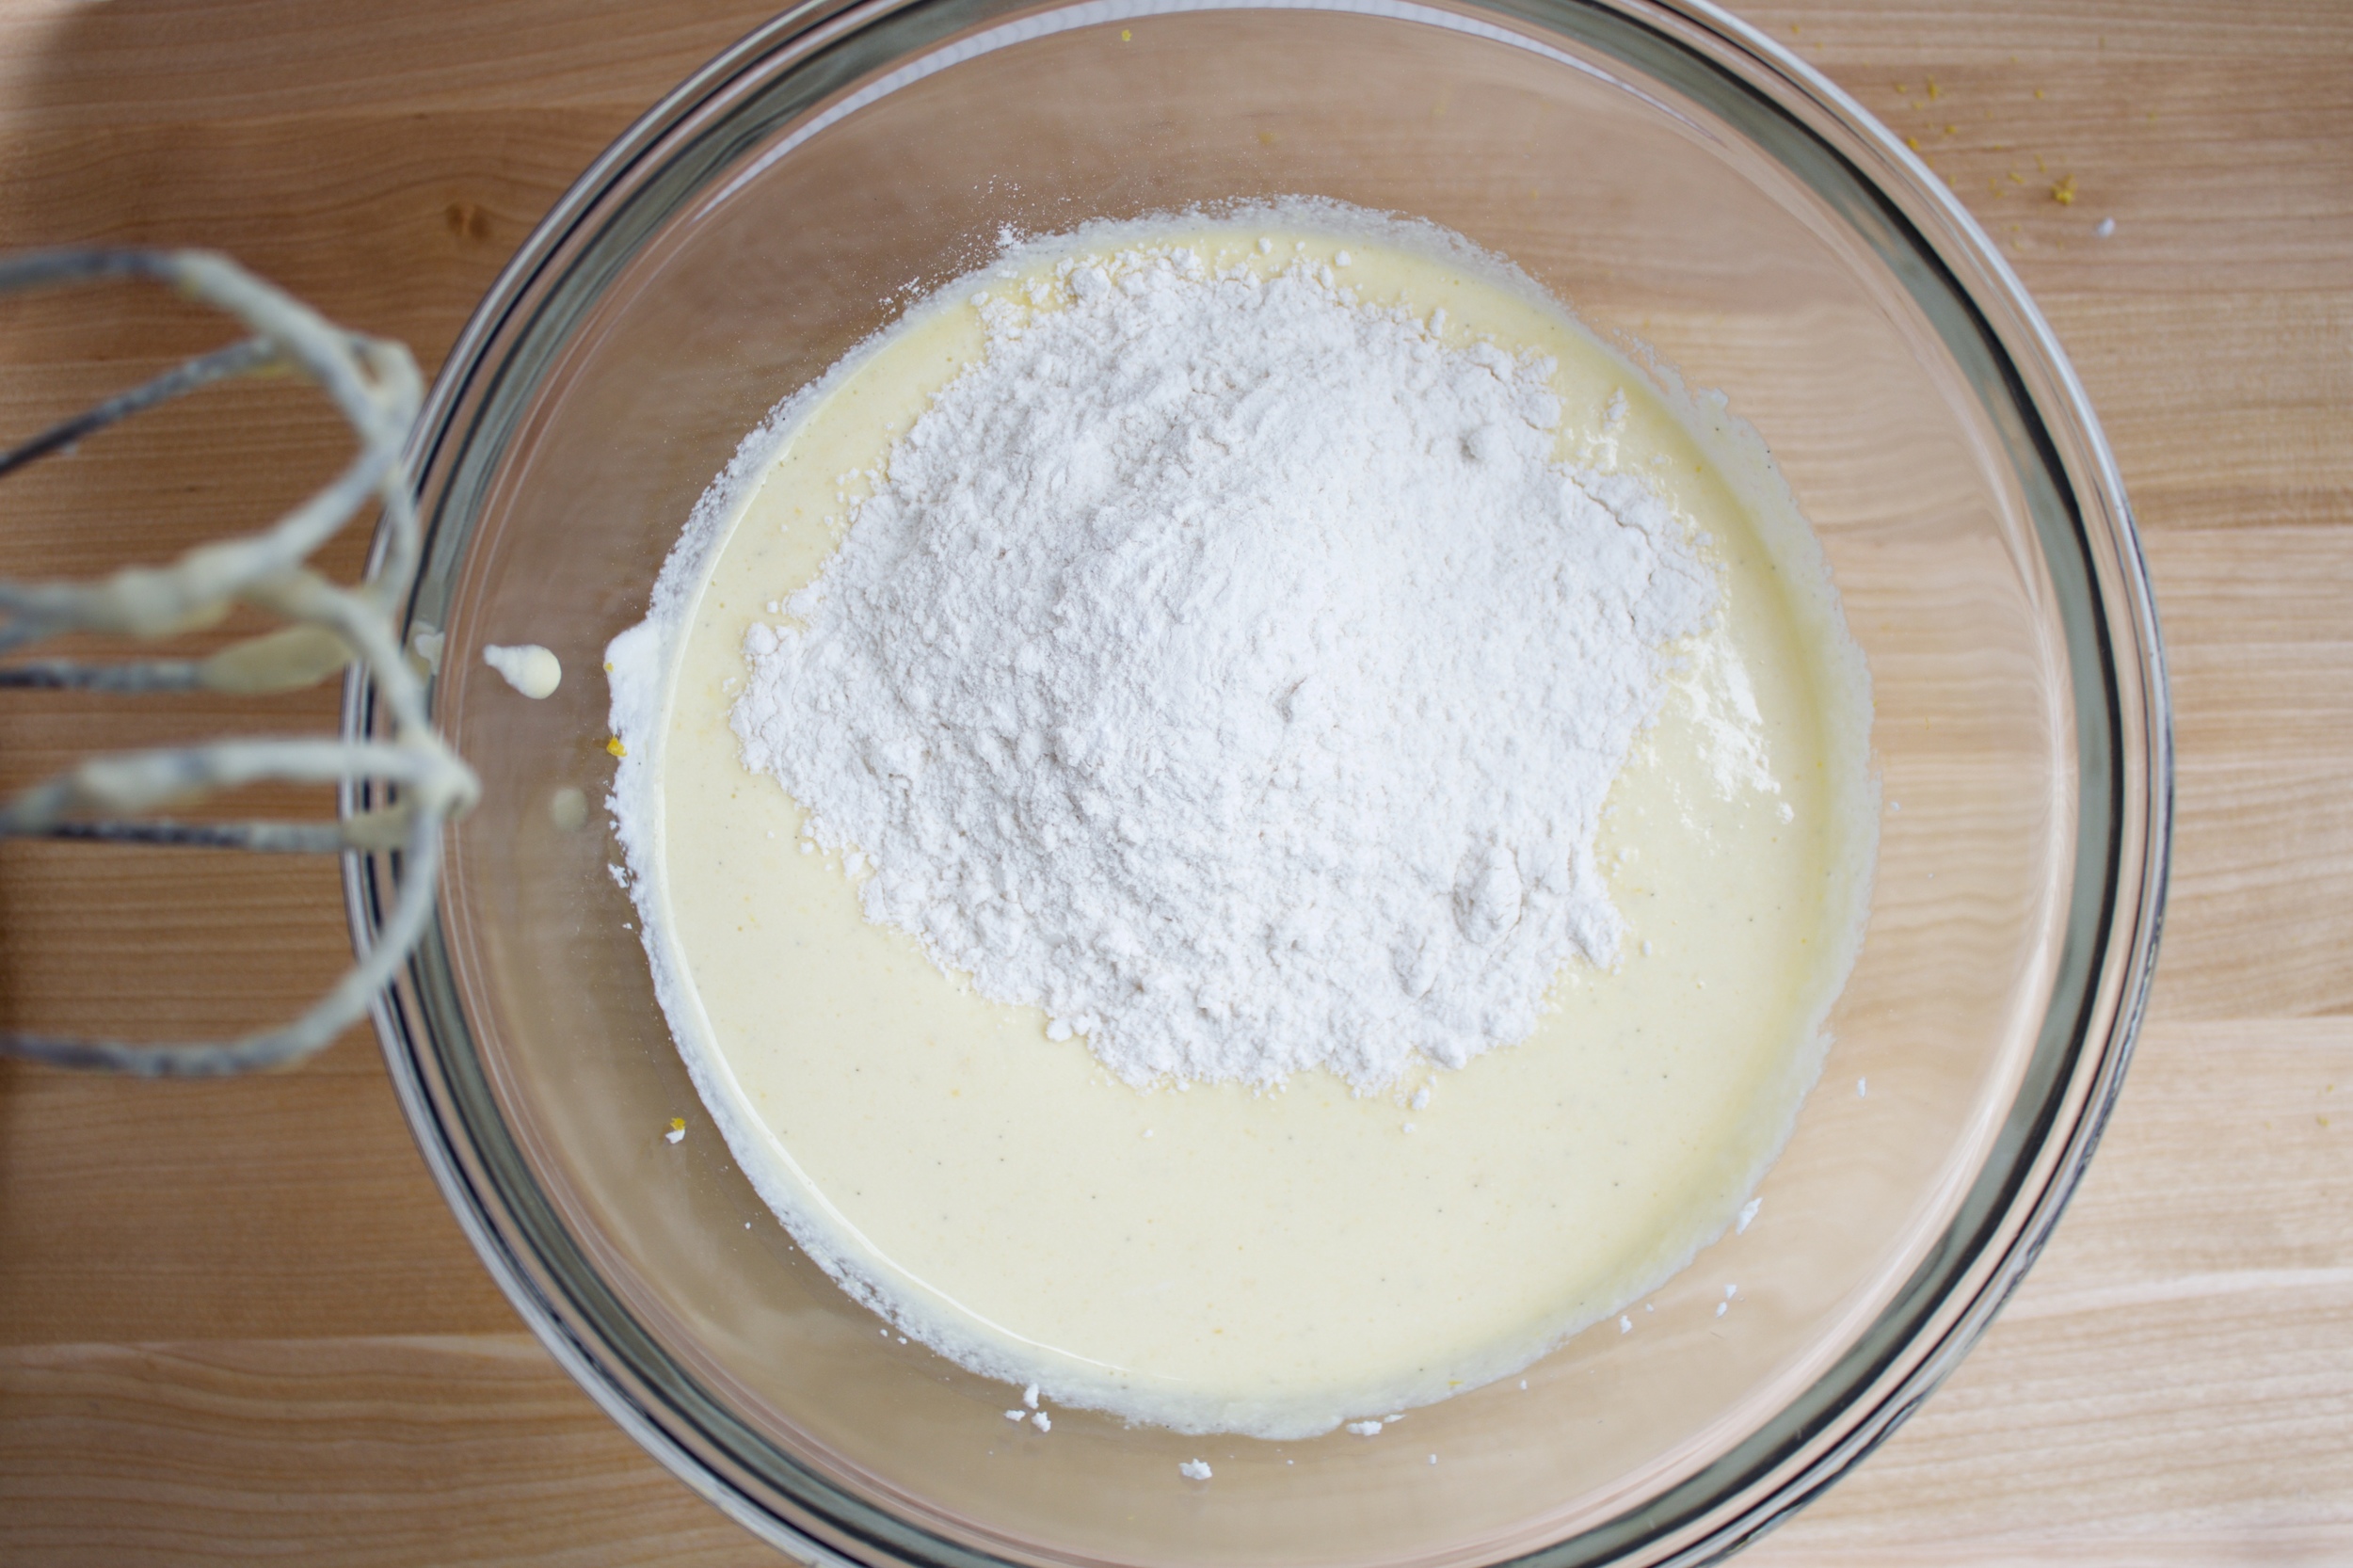 6) Add flour, baking powder, & salt to the bowl and mix